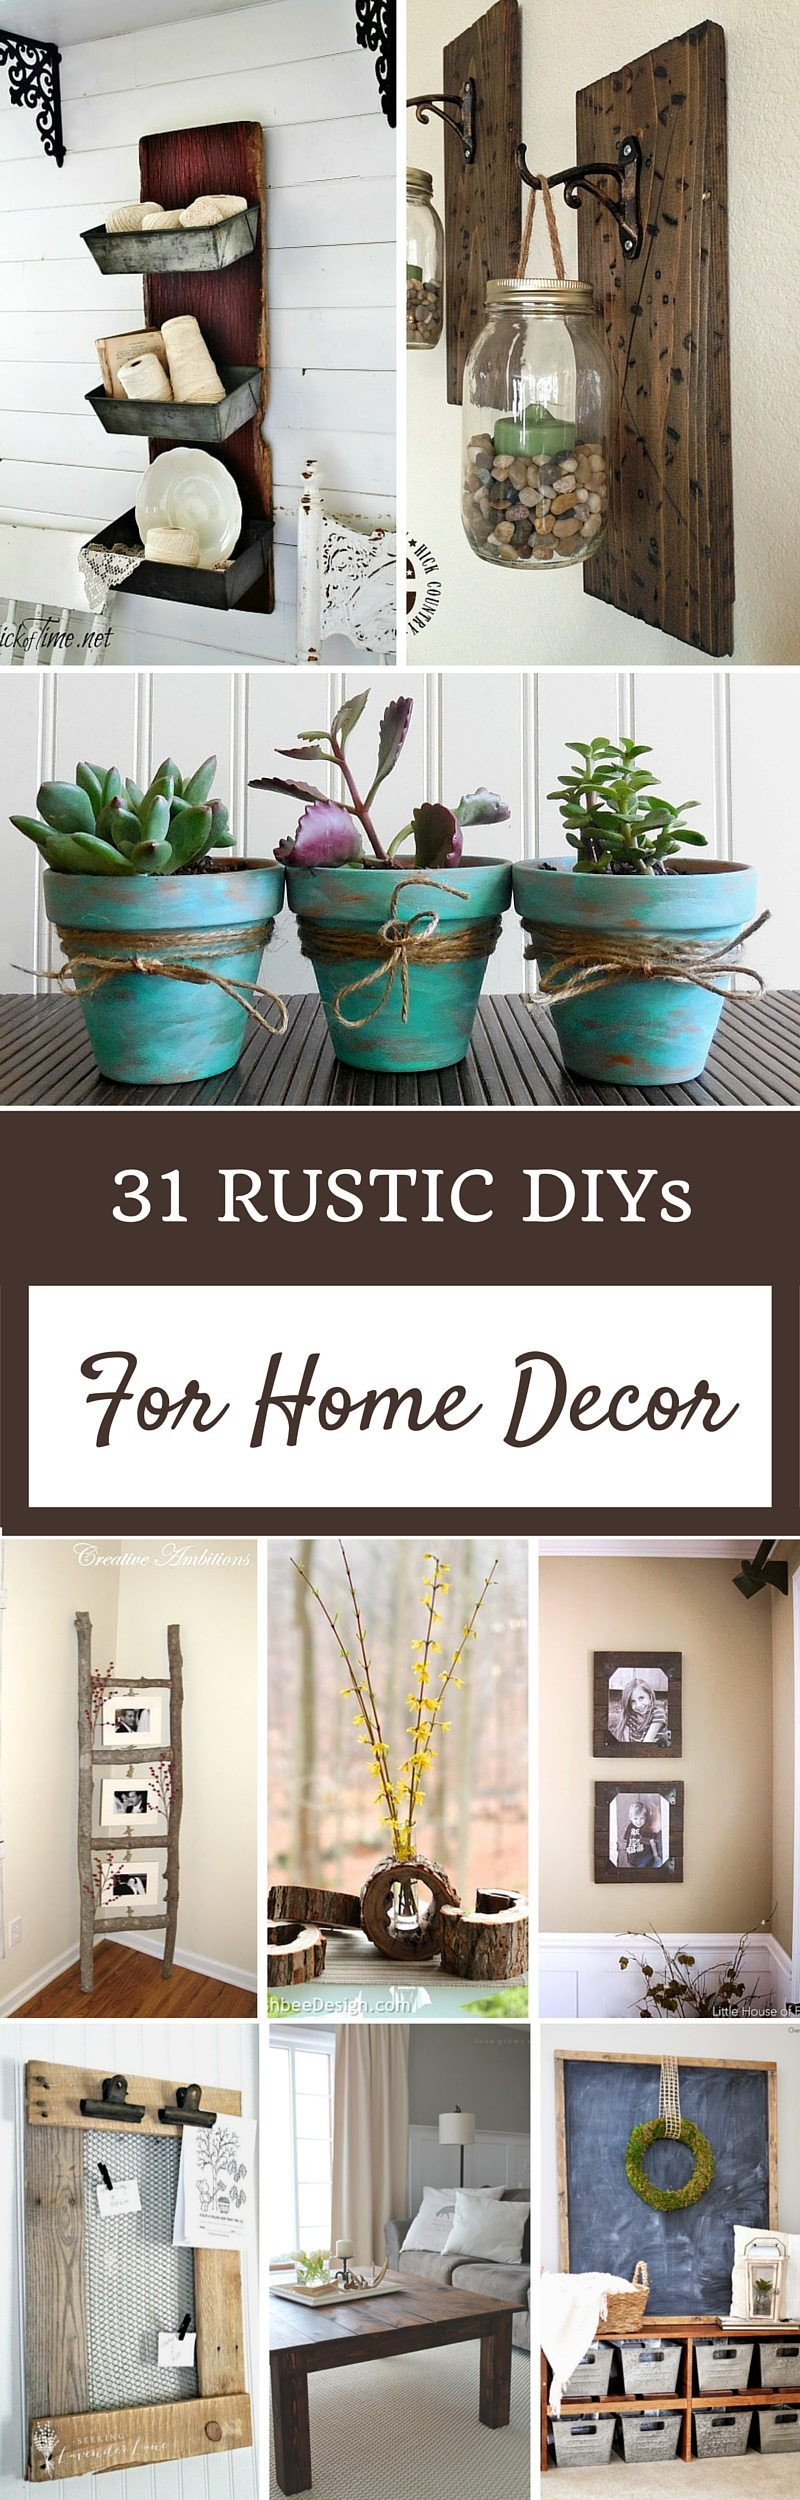 DIY Home Decor Pinterest
 Rustic Home Decor Ideas